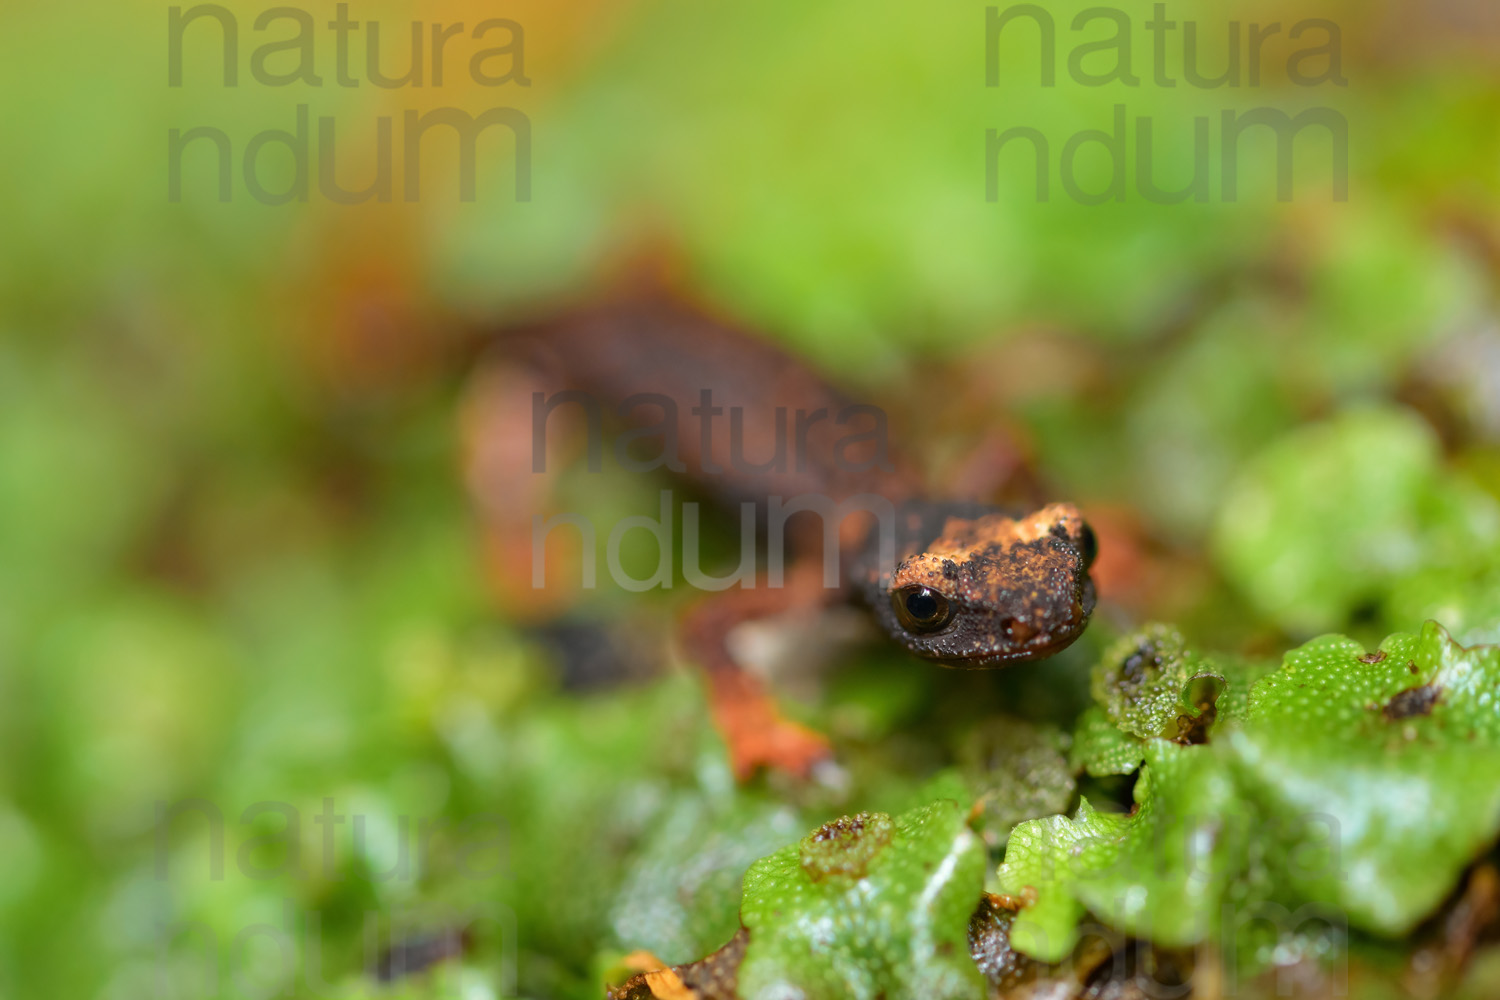 Foto di Salamandrina dagli occhiali (Salamandrina terdigitata)